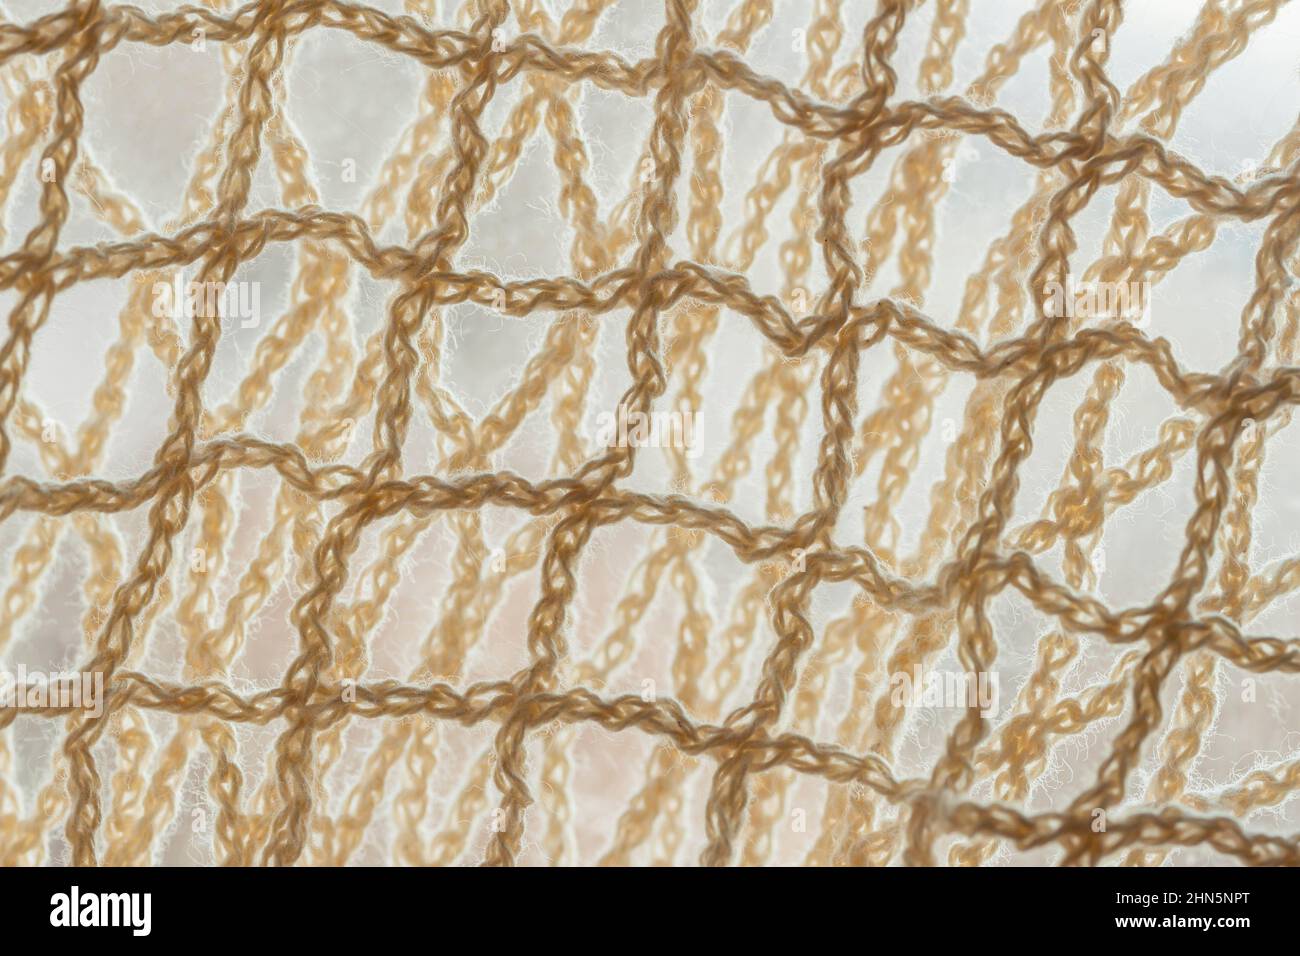 Mesh natural netting fabric close-up, light background Stock Photo